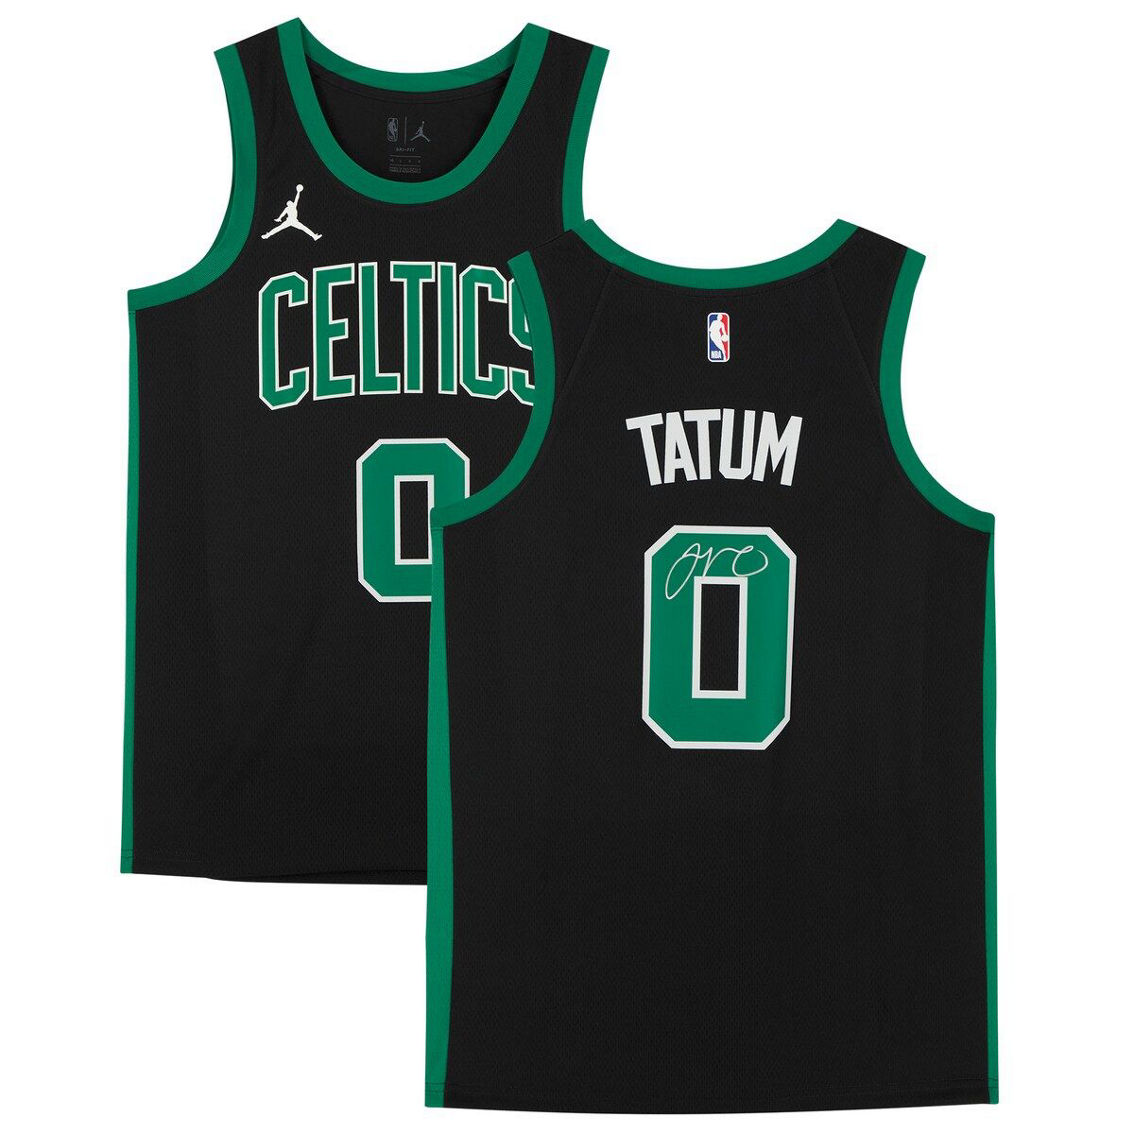 Fanatics Authentic Jayson Tatum Boston Celtics Autographed Jordan Brand 2020-21 Statement Edition Swingman Jersey - Image 2 of 4